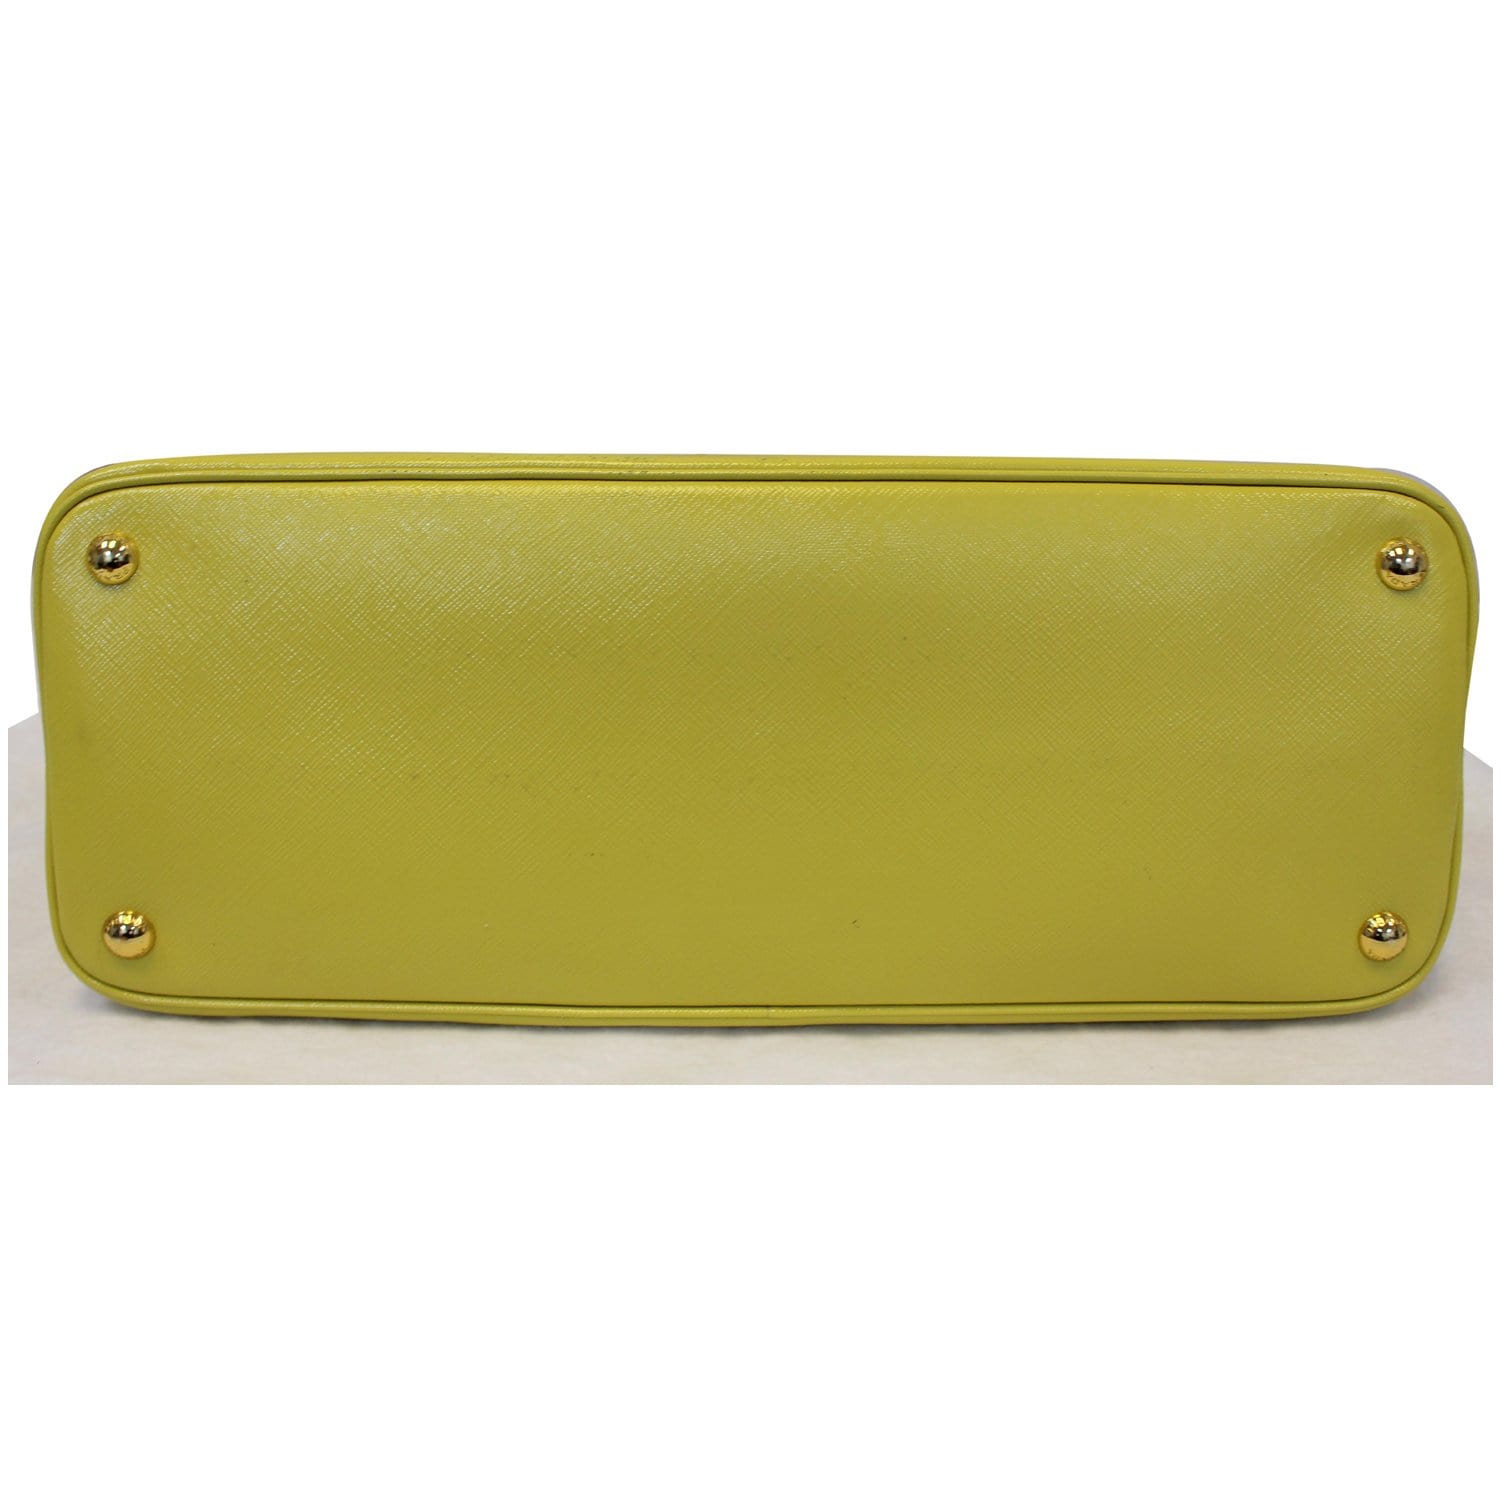 Leather - Jaquard - PRADA - Nylon - BT0706 – Prada top handle tote